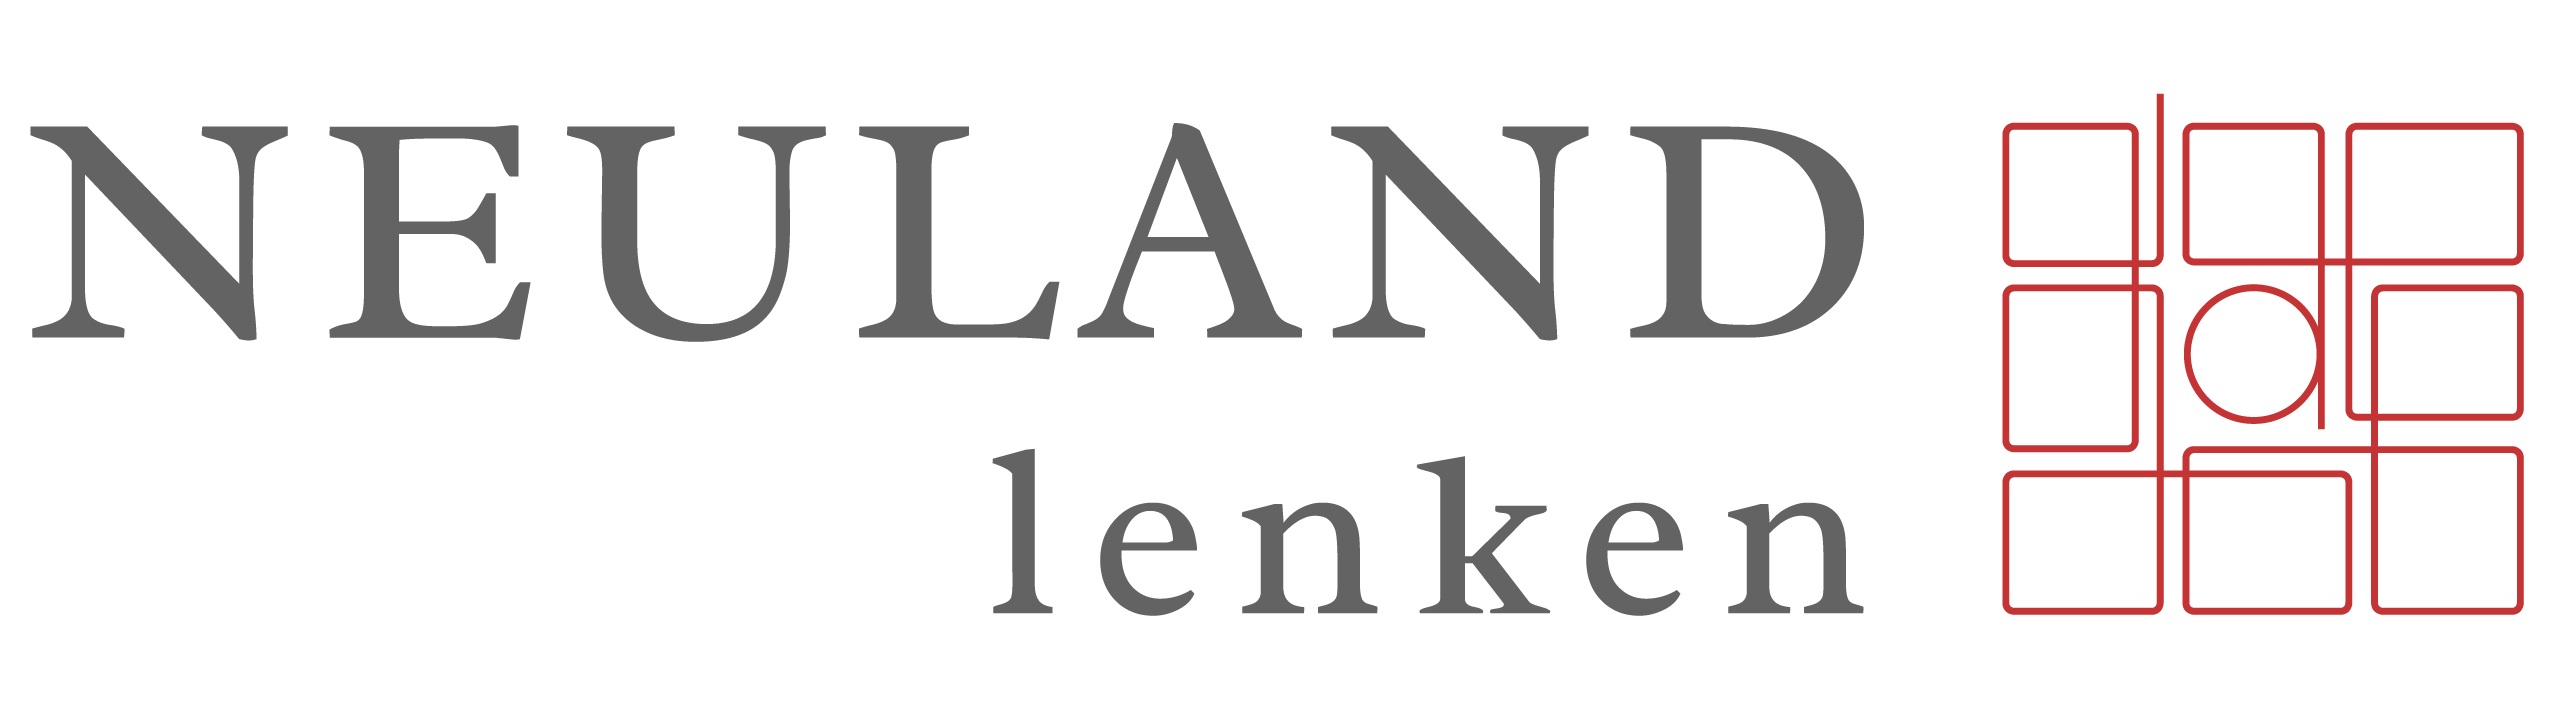 Neuland lenken Logo